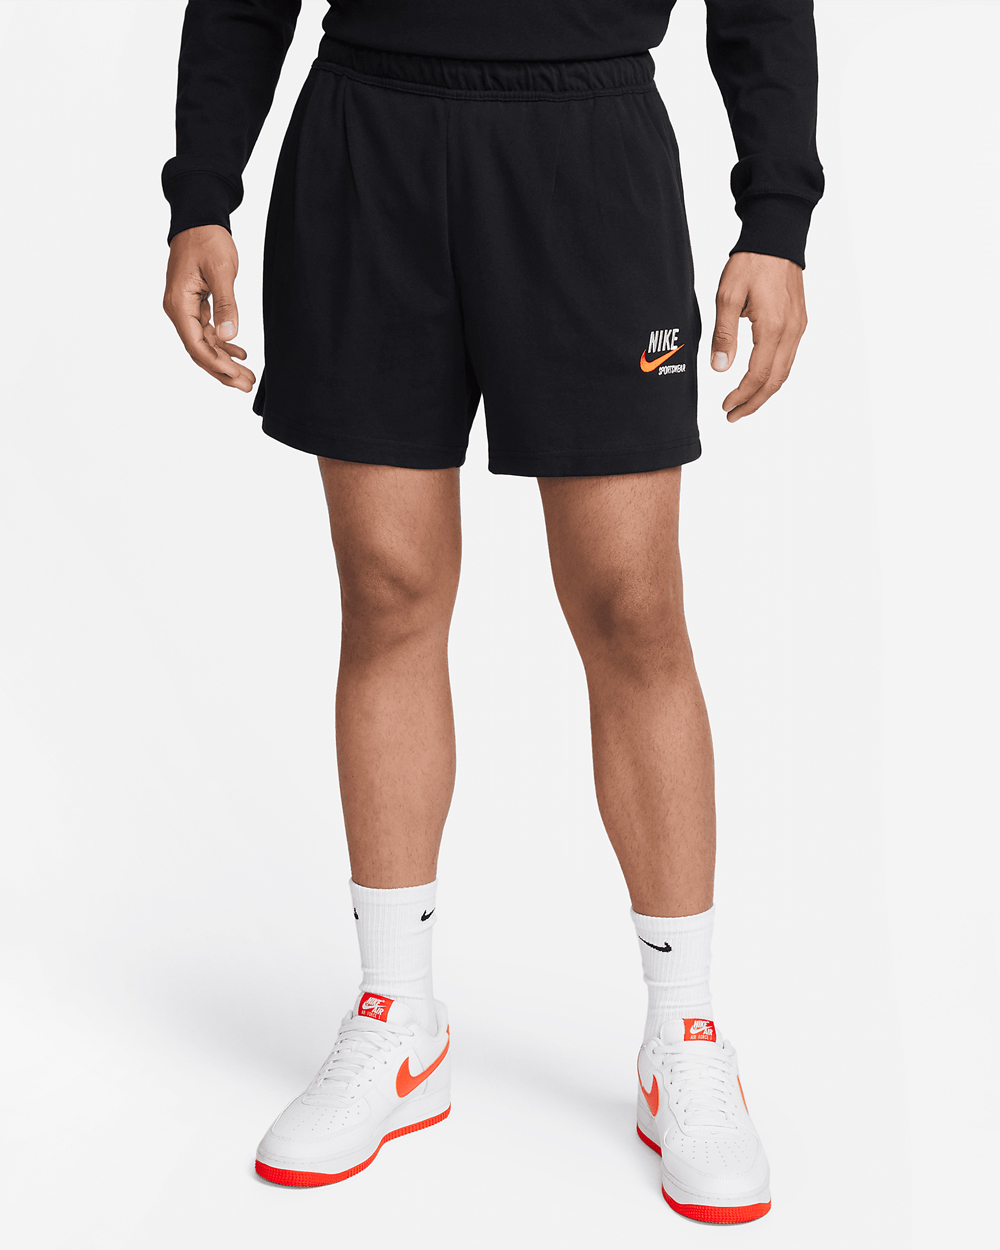 Nike-Sportswear-Trend-Shorts-Black-White-Orange